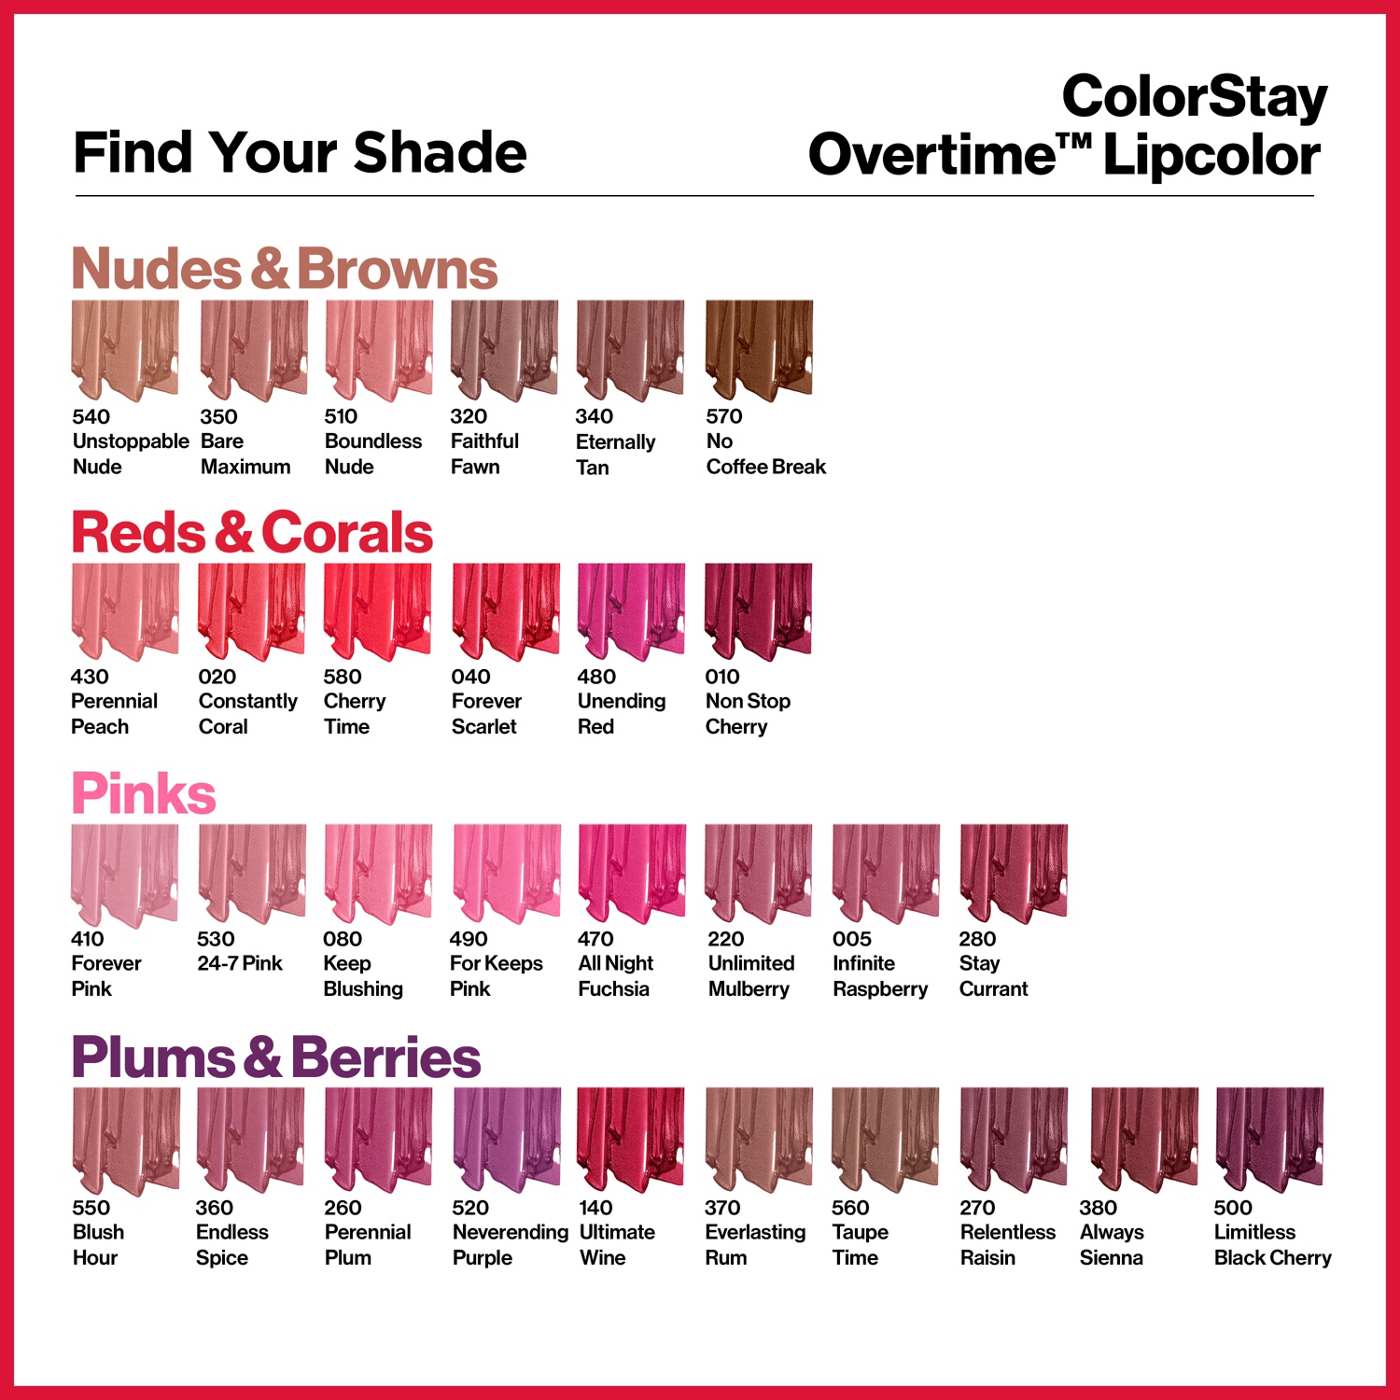 Revlon ColorStay Overtime Lipcolor, Long Wearing Liquid Lipstick, 005 Infinite Raspberry; image 6 of 7